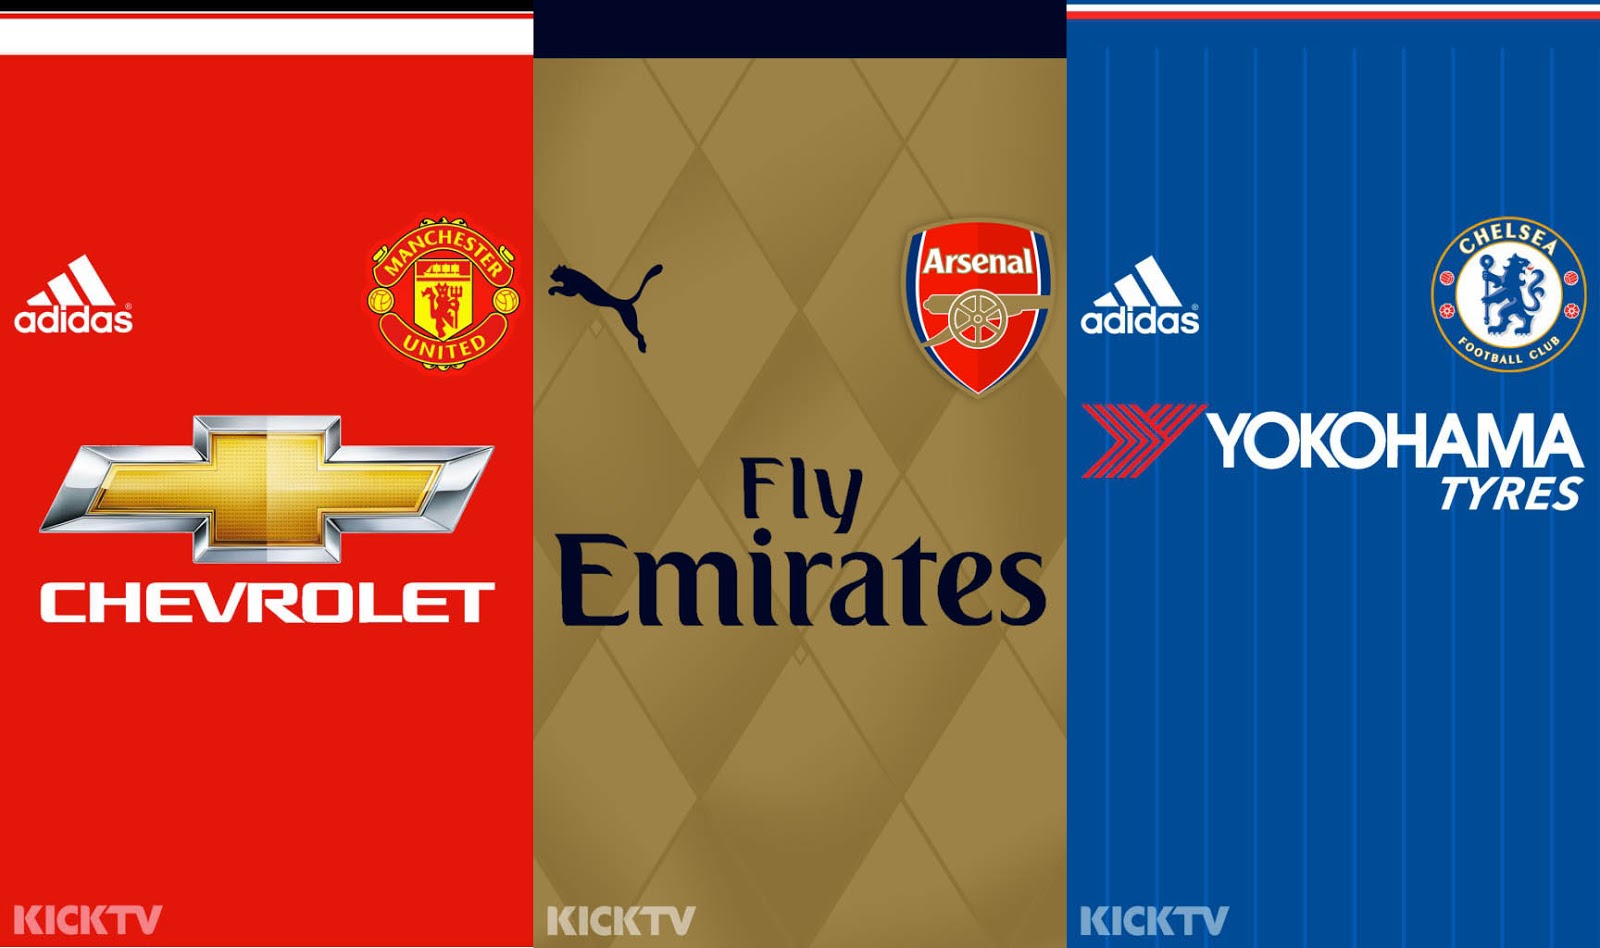 Premier League 15 16 Kit Mobile Wallpapers Footy Headlines Afalchi Free images wallpape [afalchi.blogspot.com]